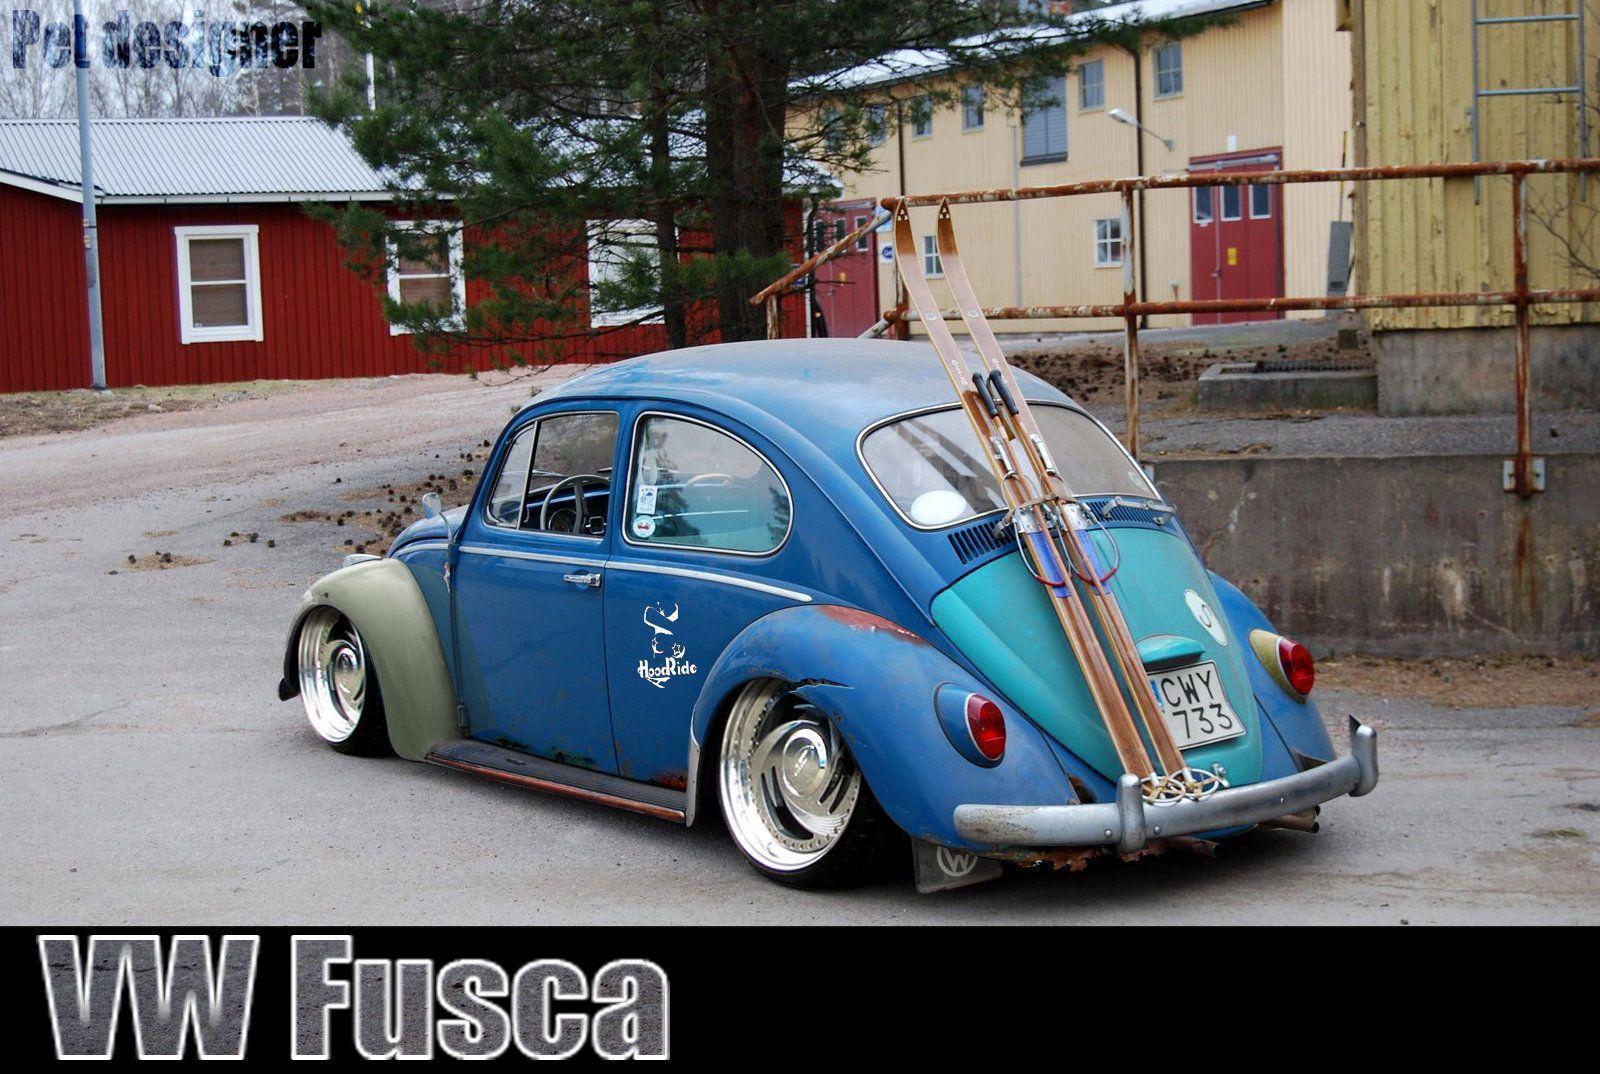 VW Fusca HoodRide